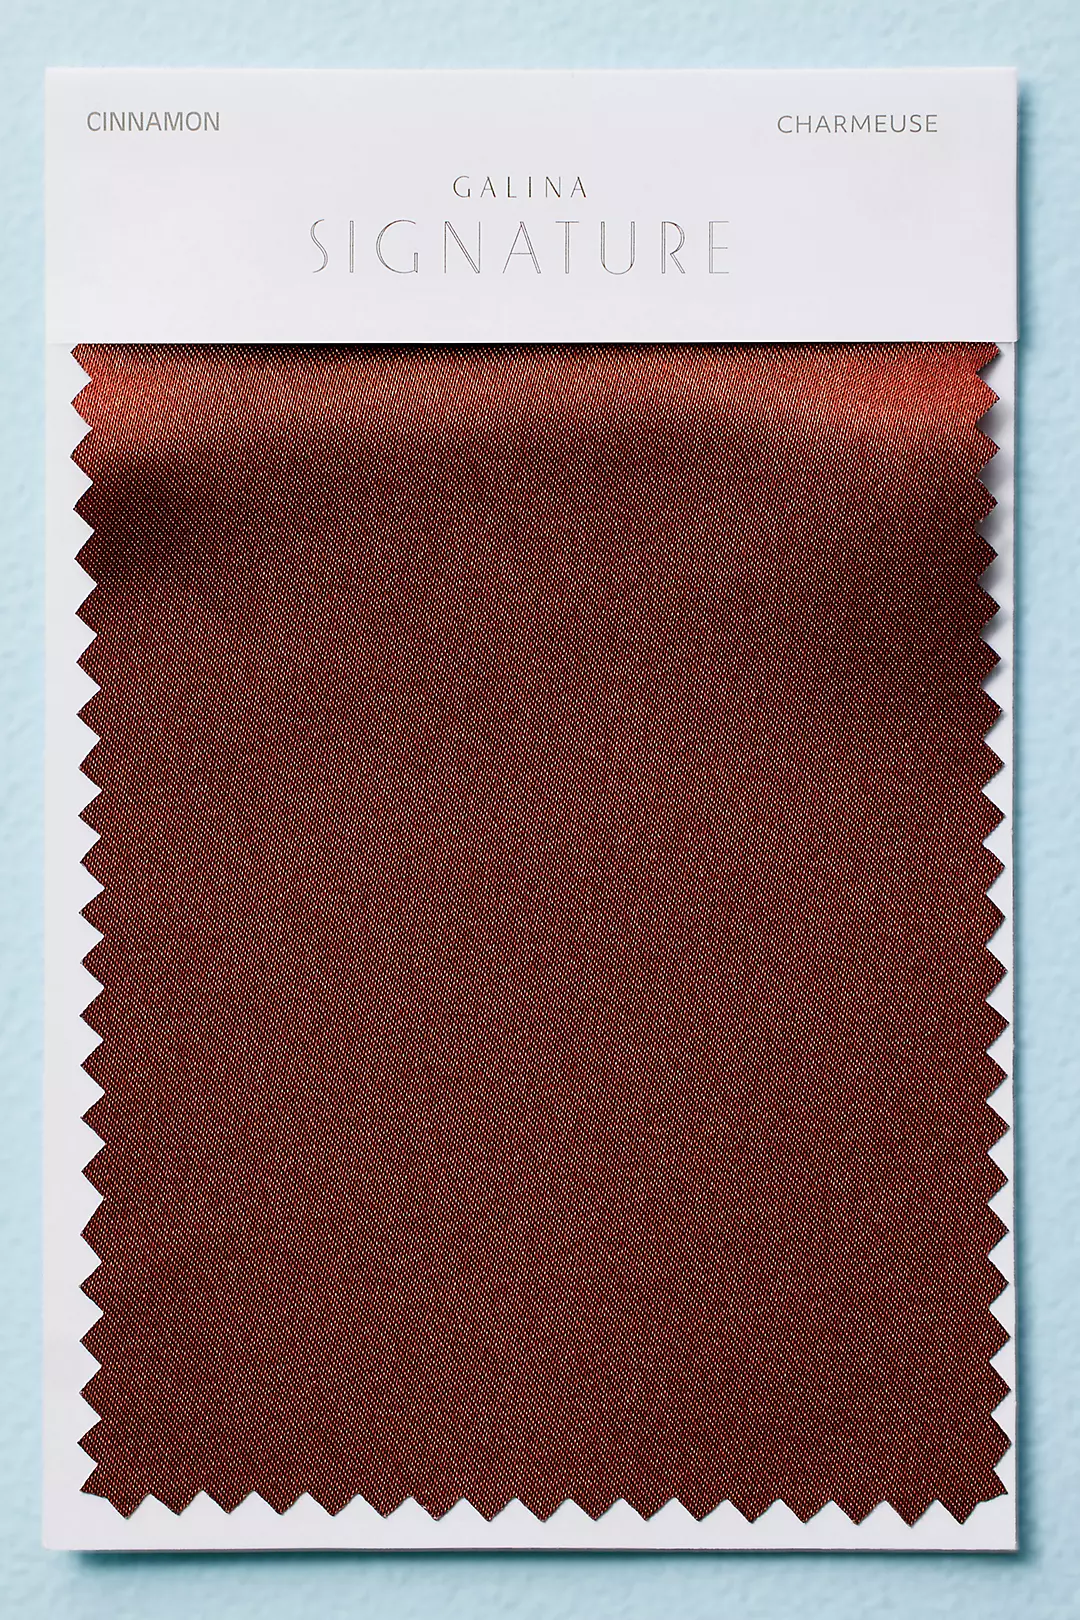 Cinnamon Fabric Swatch Image